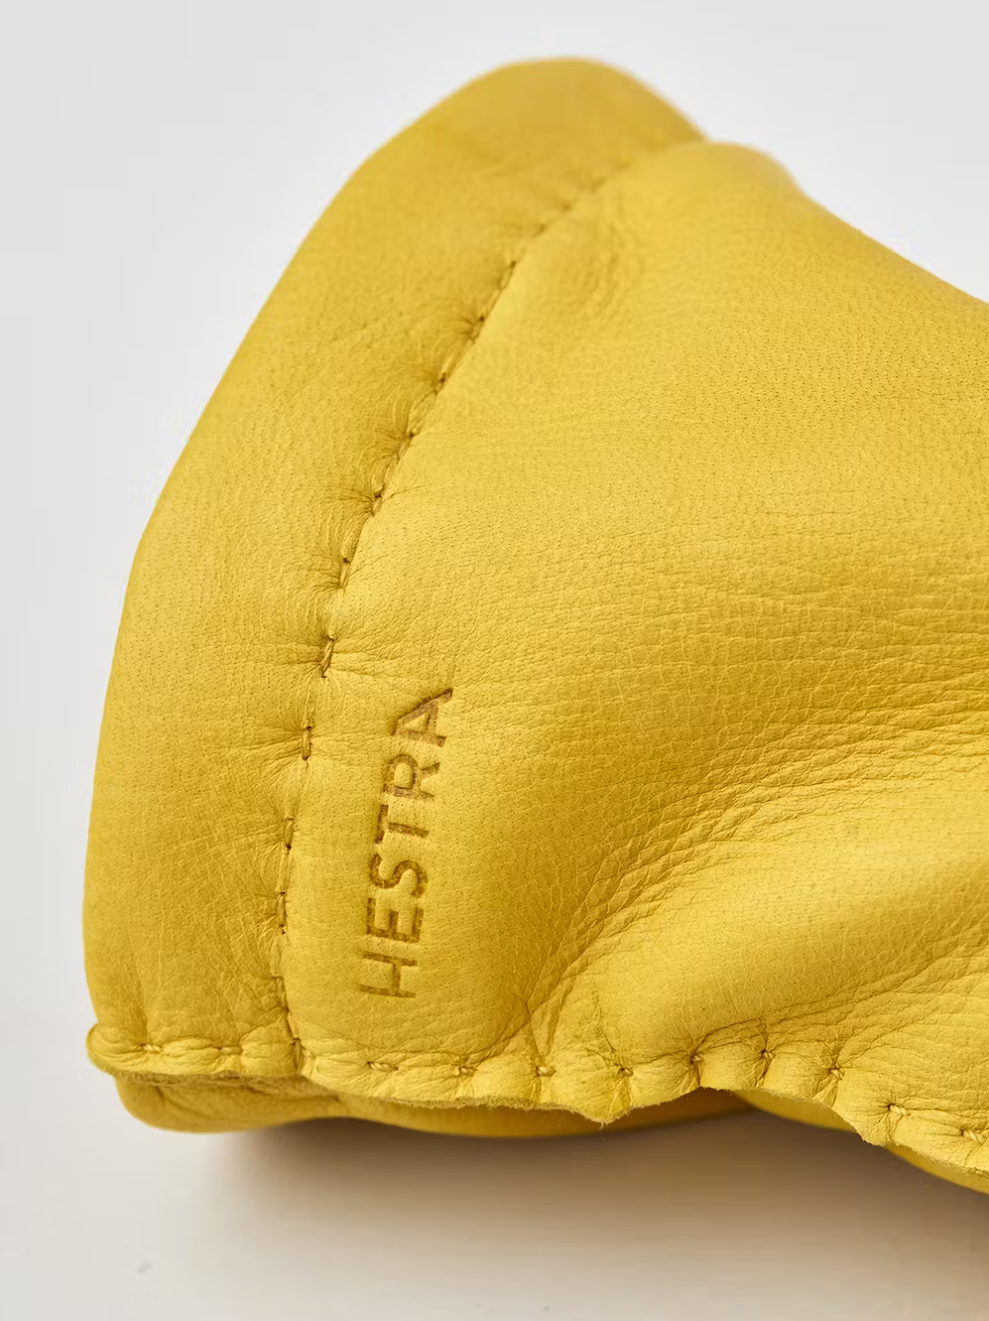 Matthew Deerskin Gloves Natural Yellow